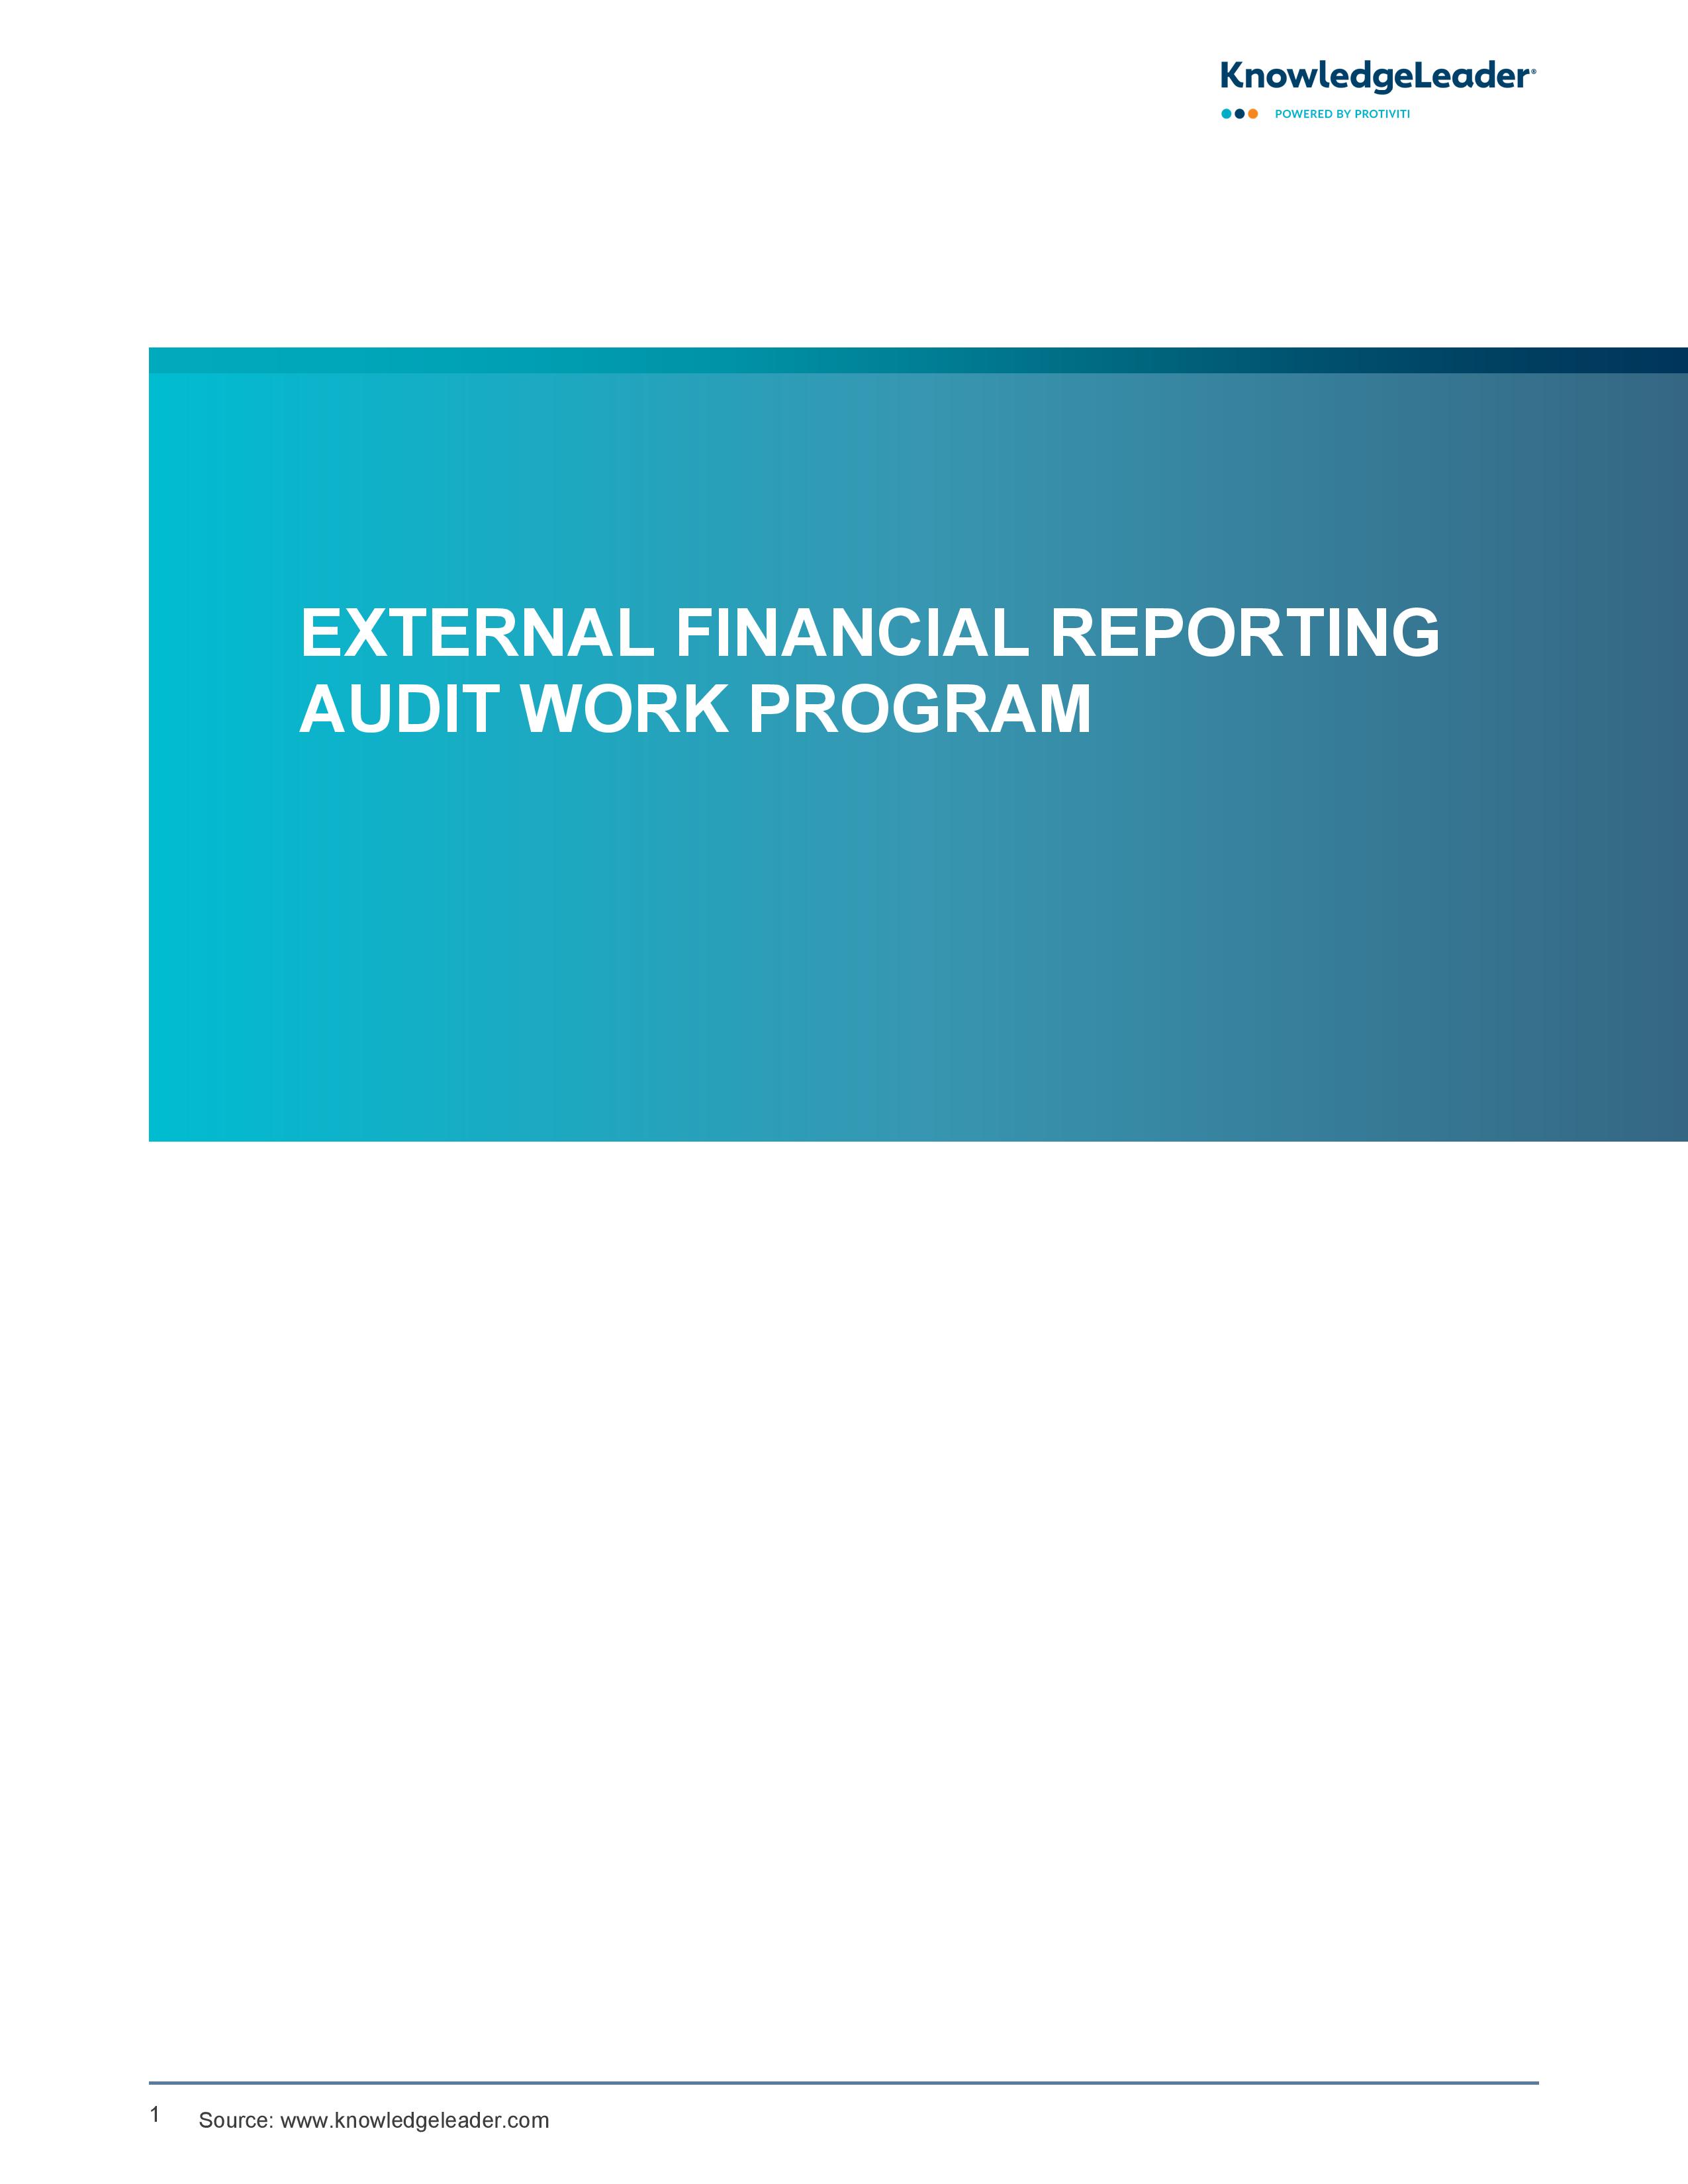 External Financial Reporting Audit Work Program Page 1